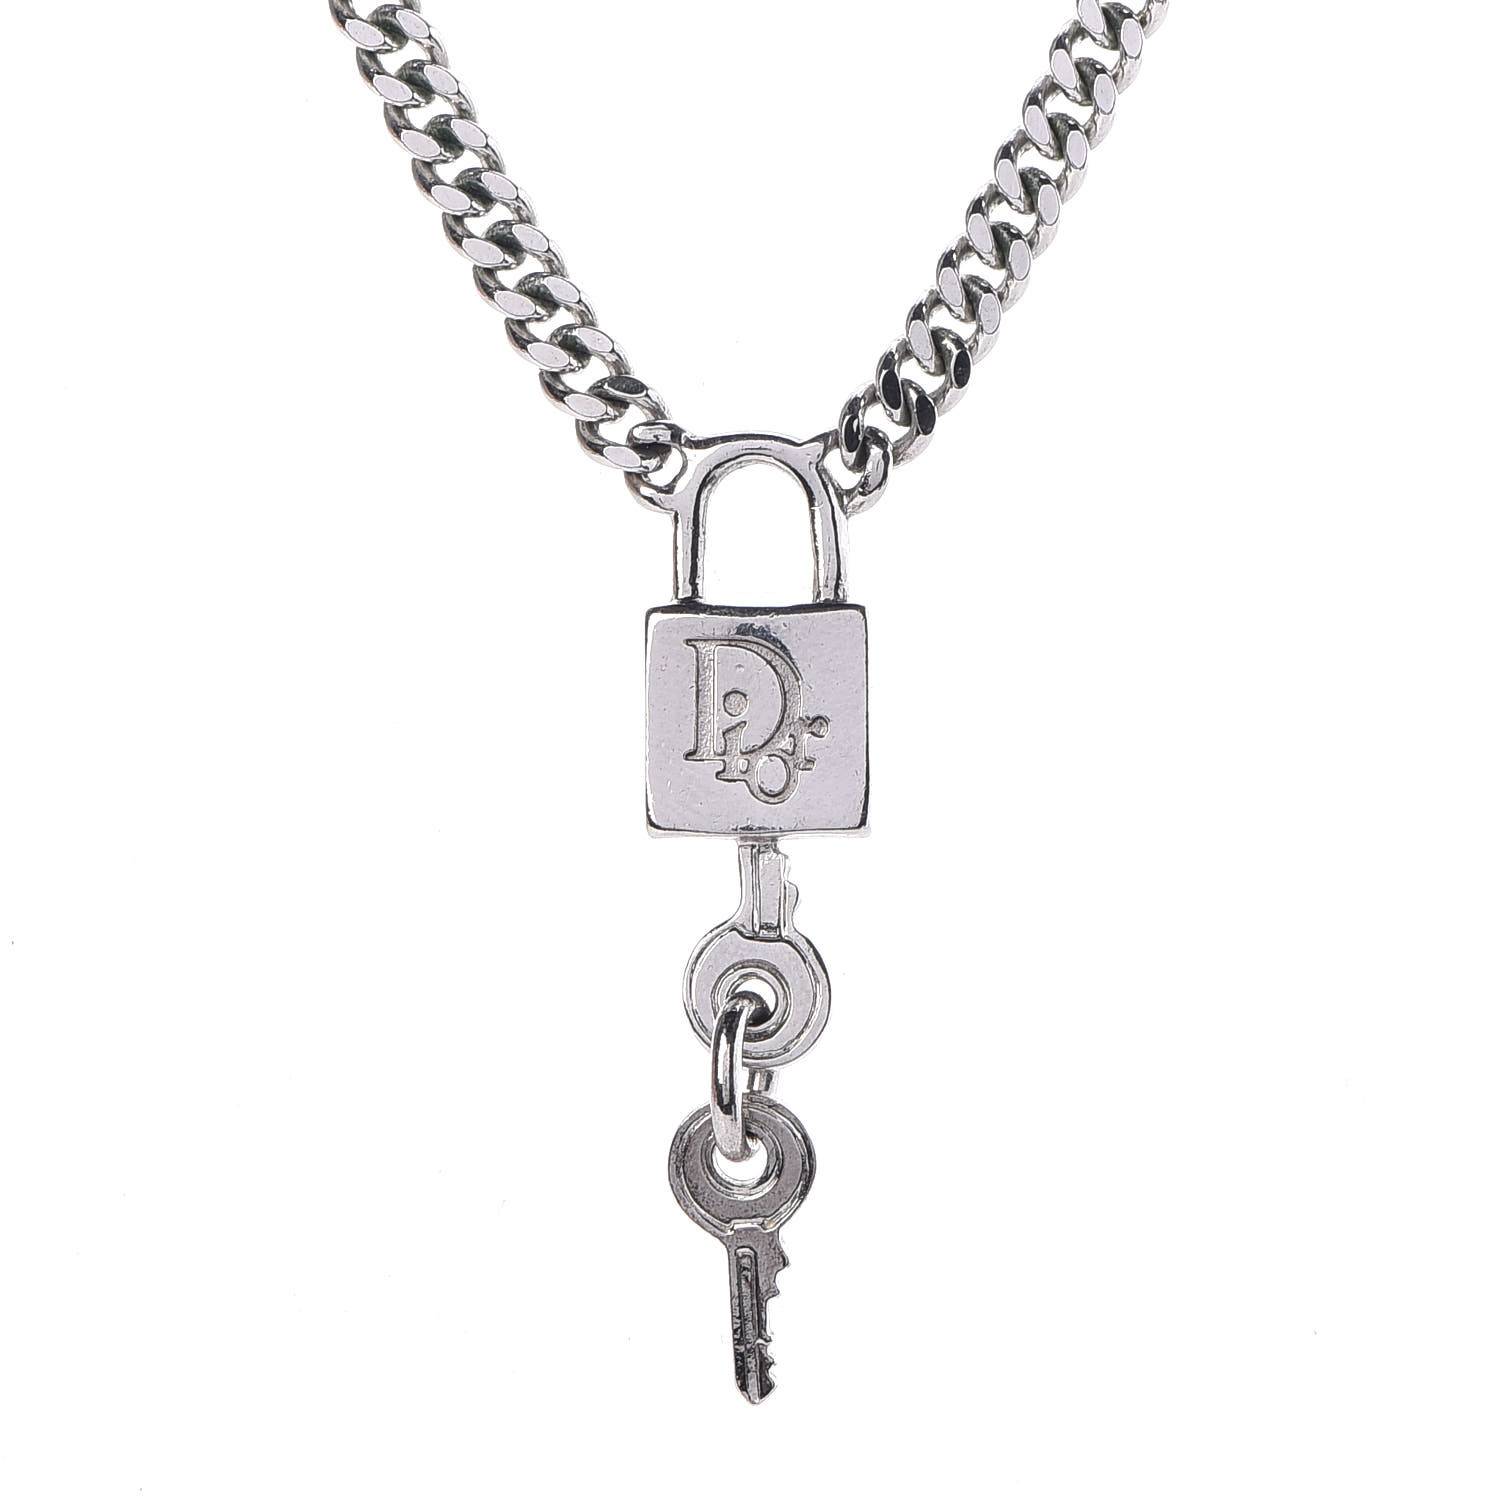 christian dior lock necklace